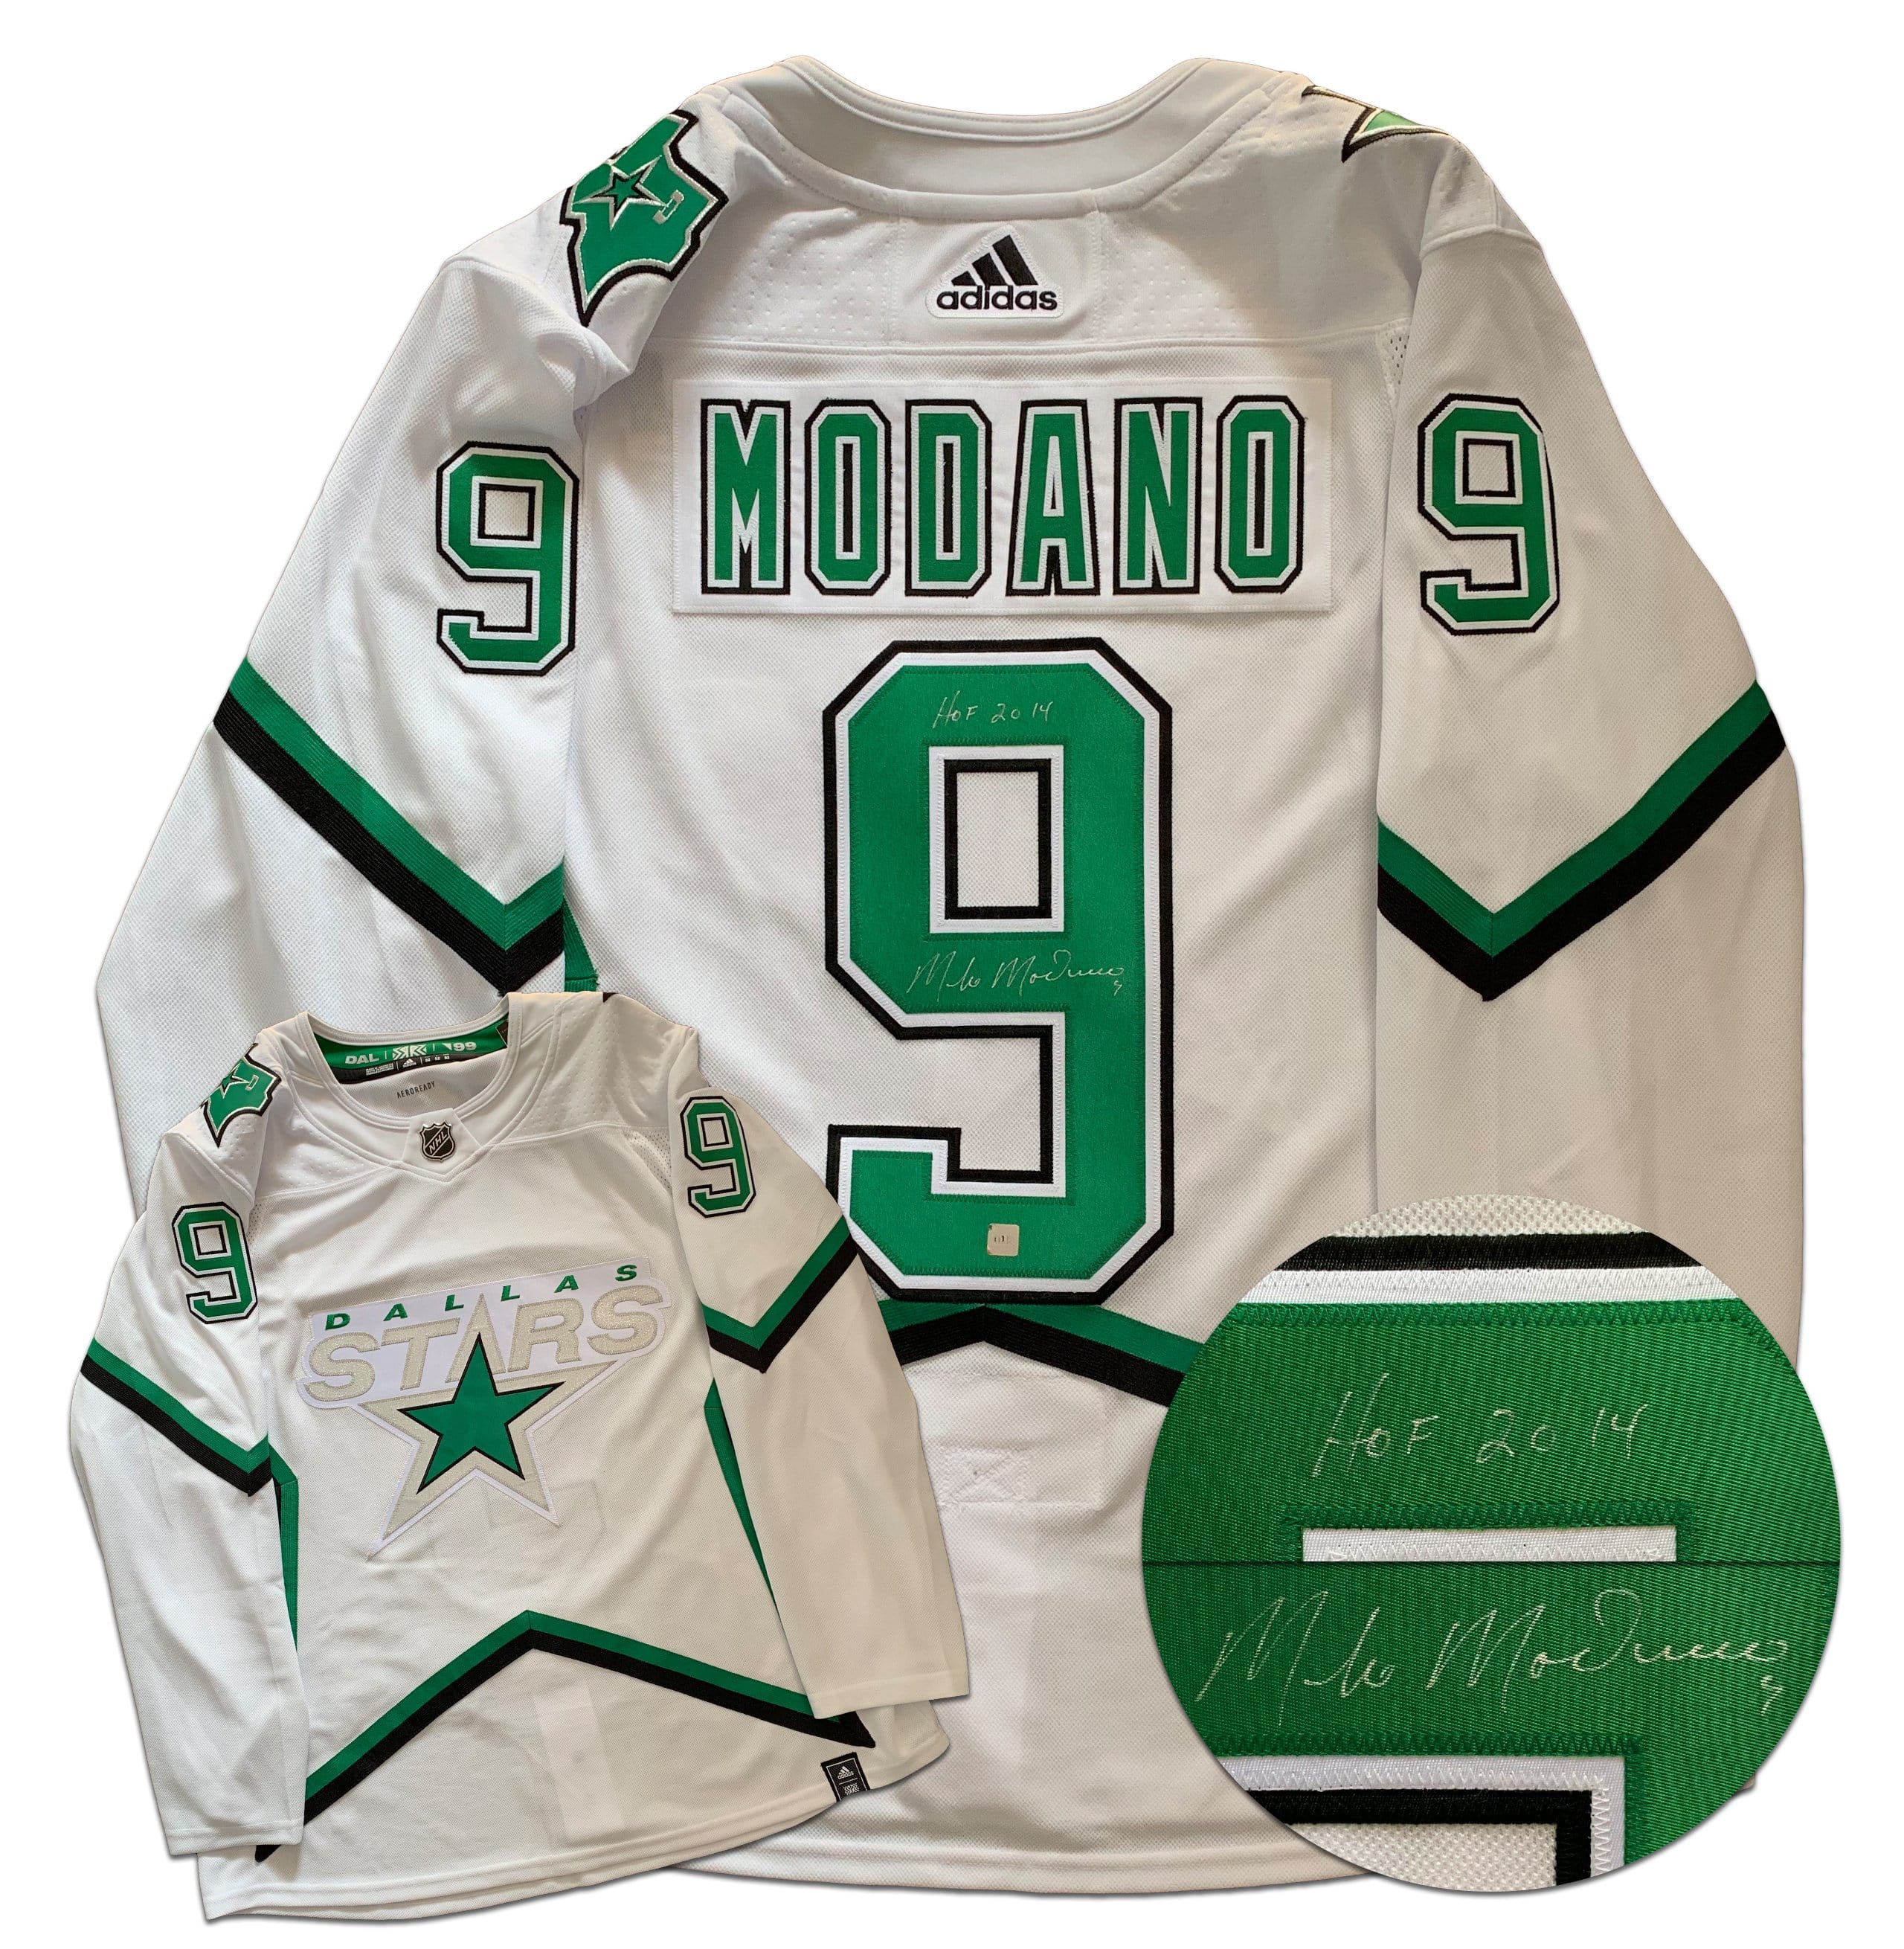 Mike Modano Signed North Stars Jersey Inscribed HOF 2014 (COJO